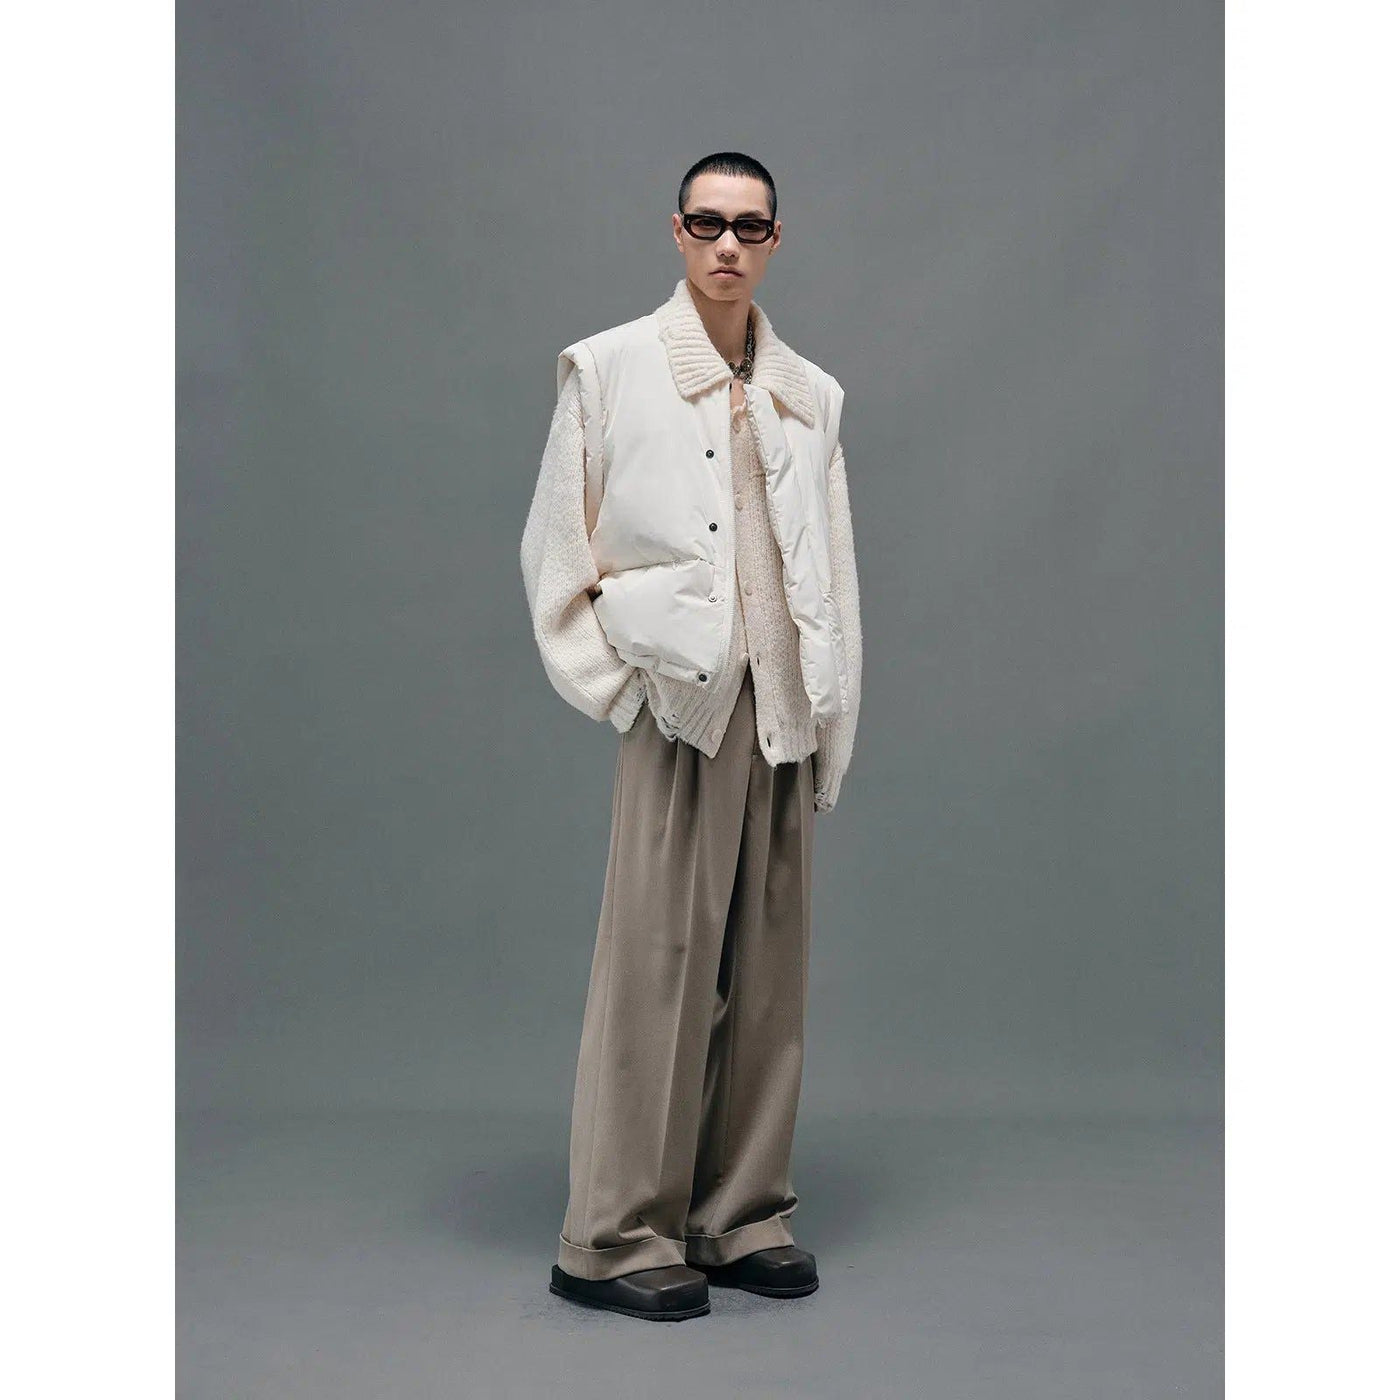 Folded Hem Drapey Trousers Korean Street Fashion Pants By NANS Shop Online at OH Vault